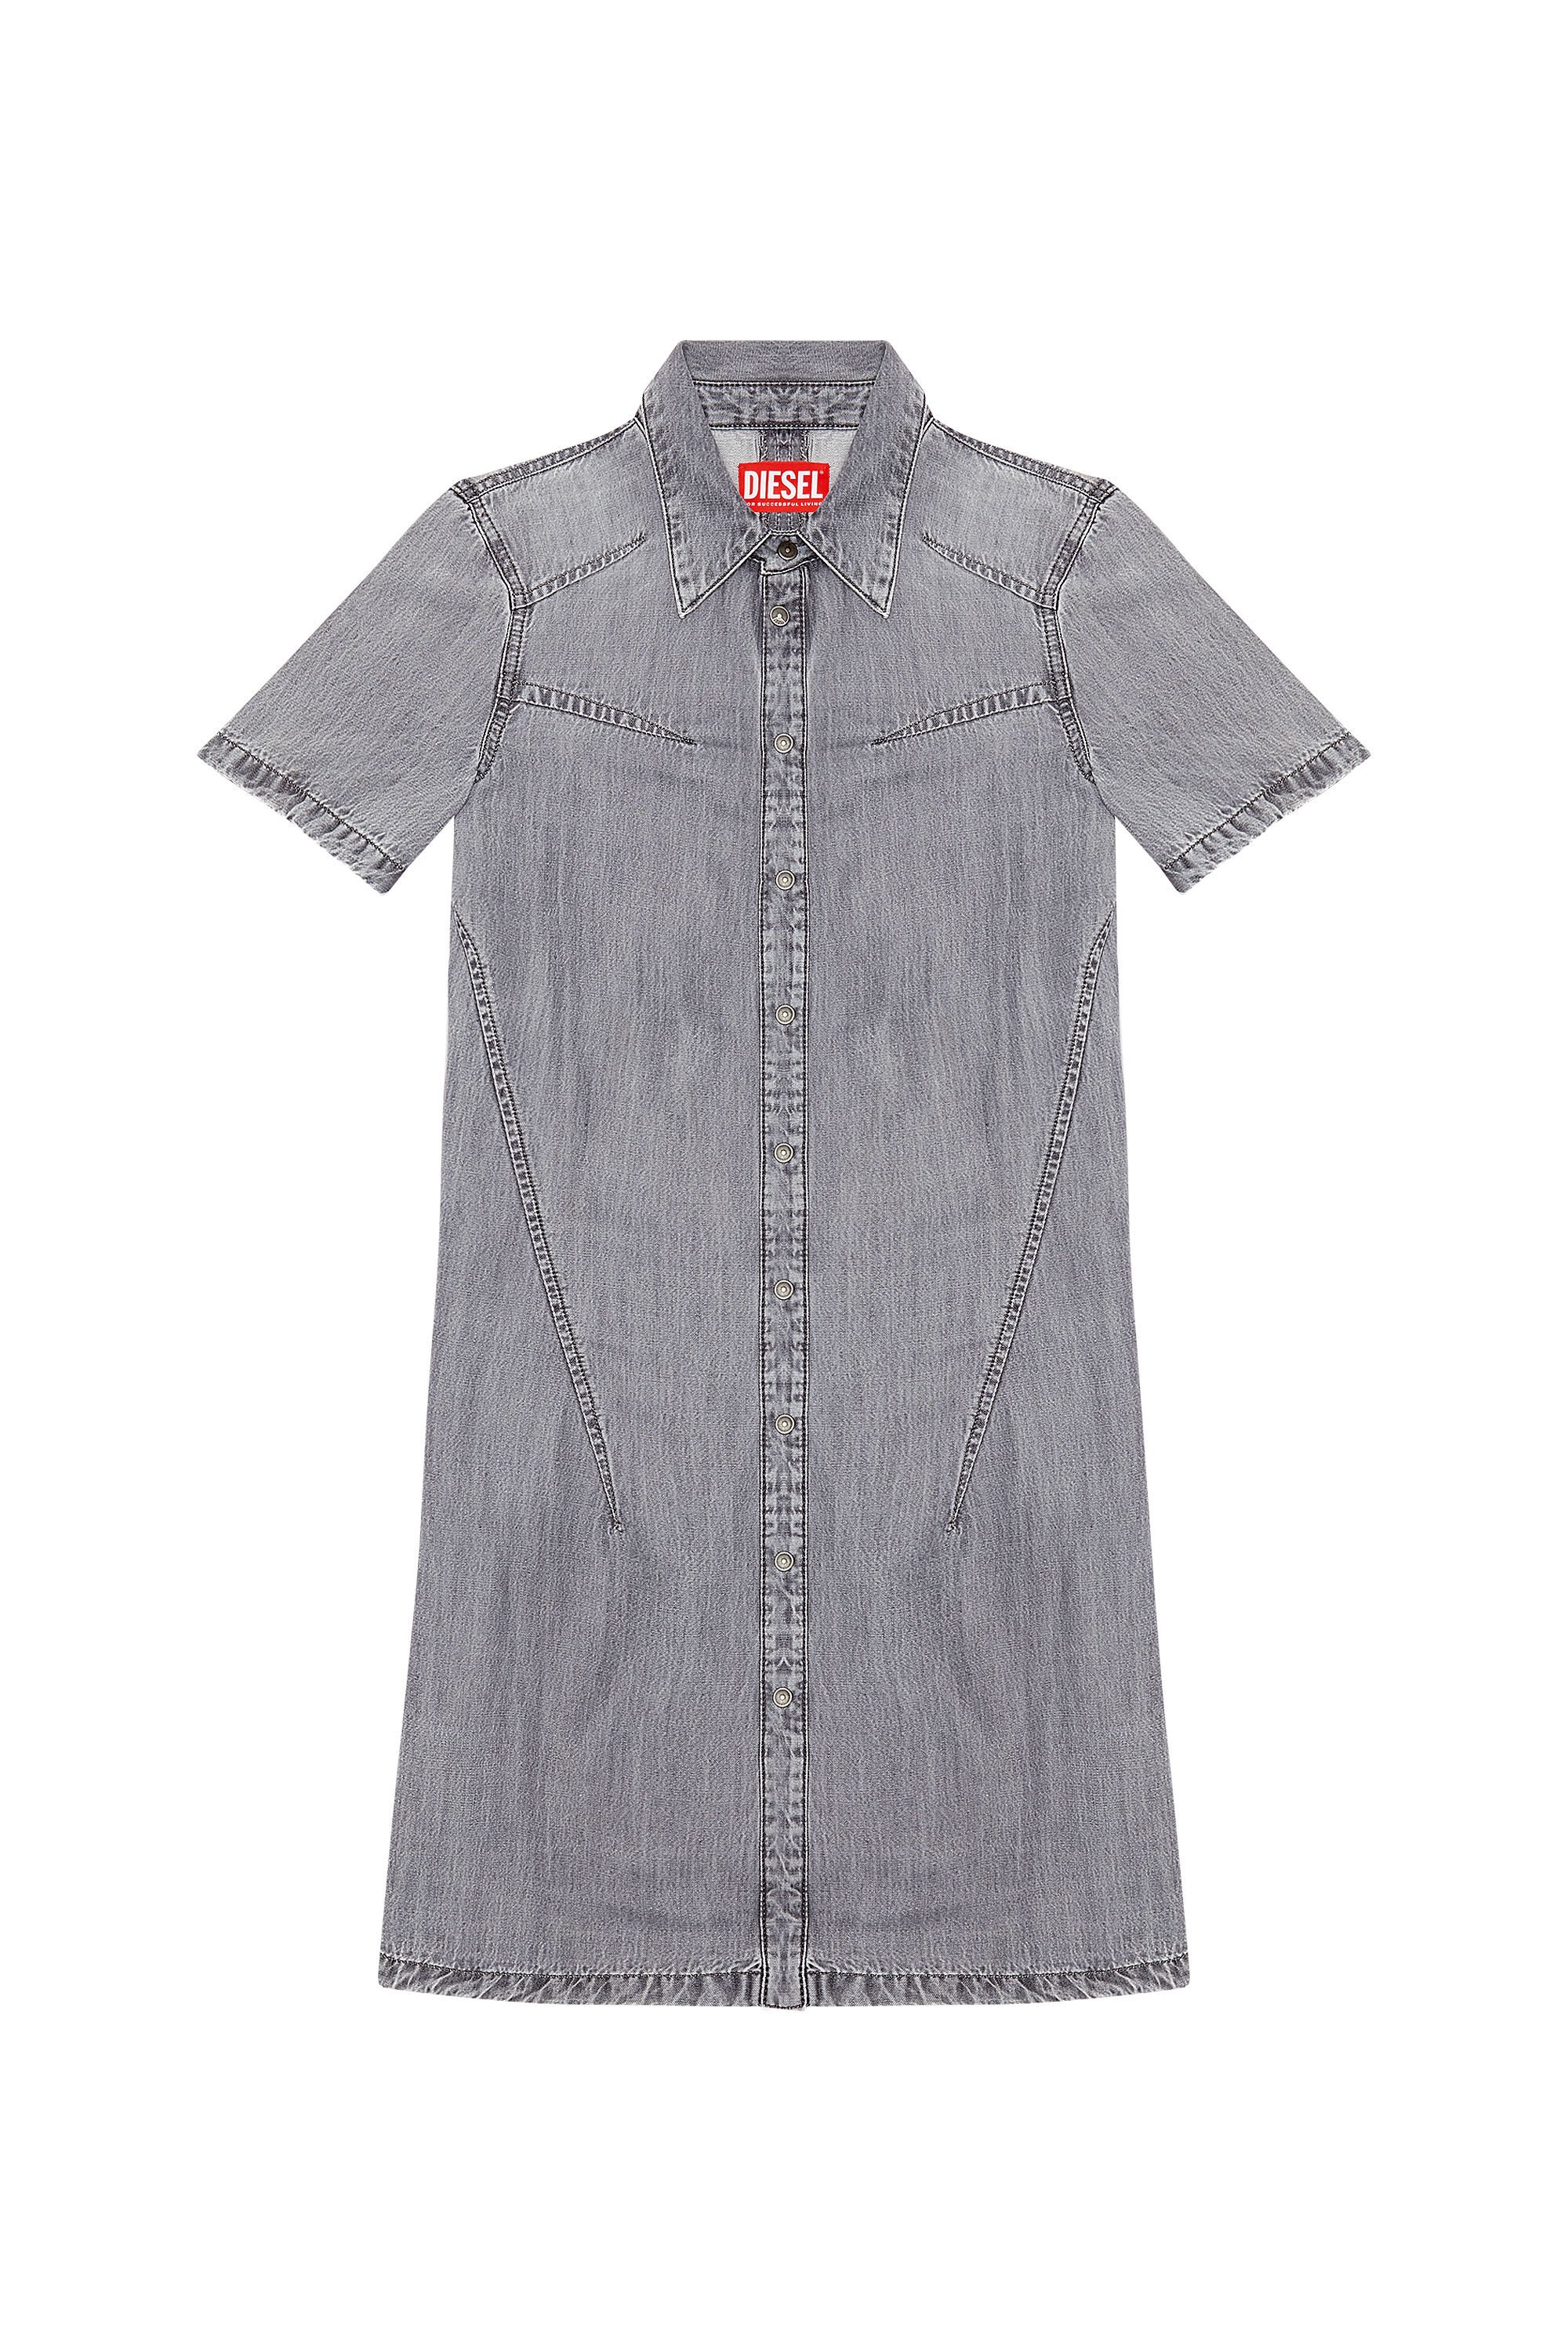 Diesel - DE-SHIRTY, Woman Buttoned shirt dress in light denim in Grey - Image 2